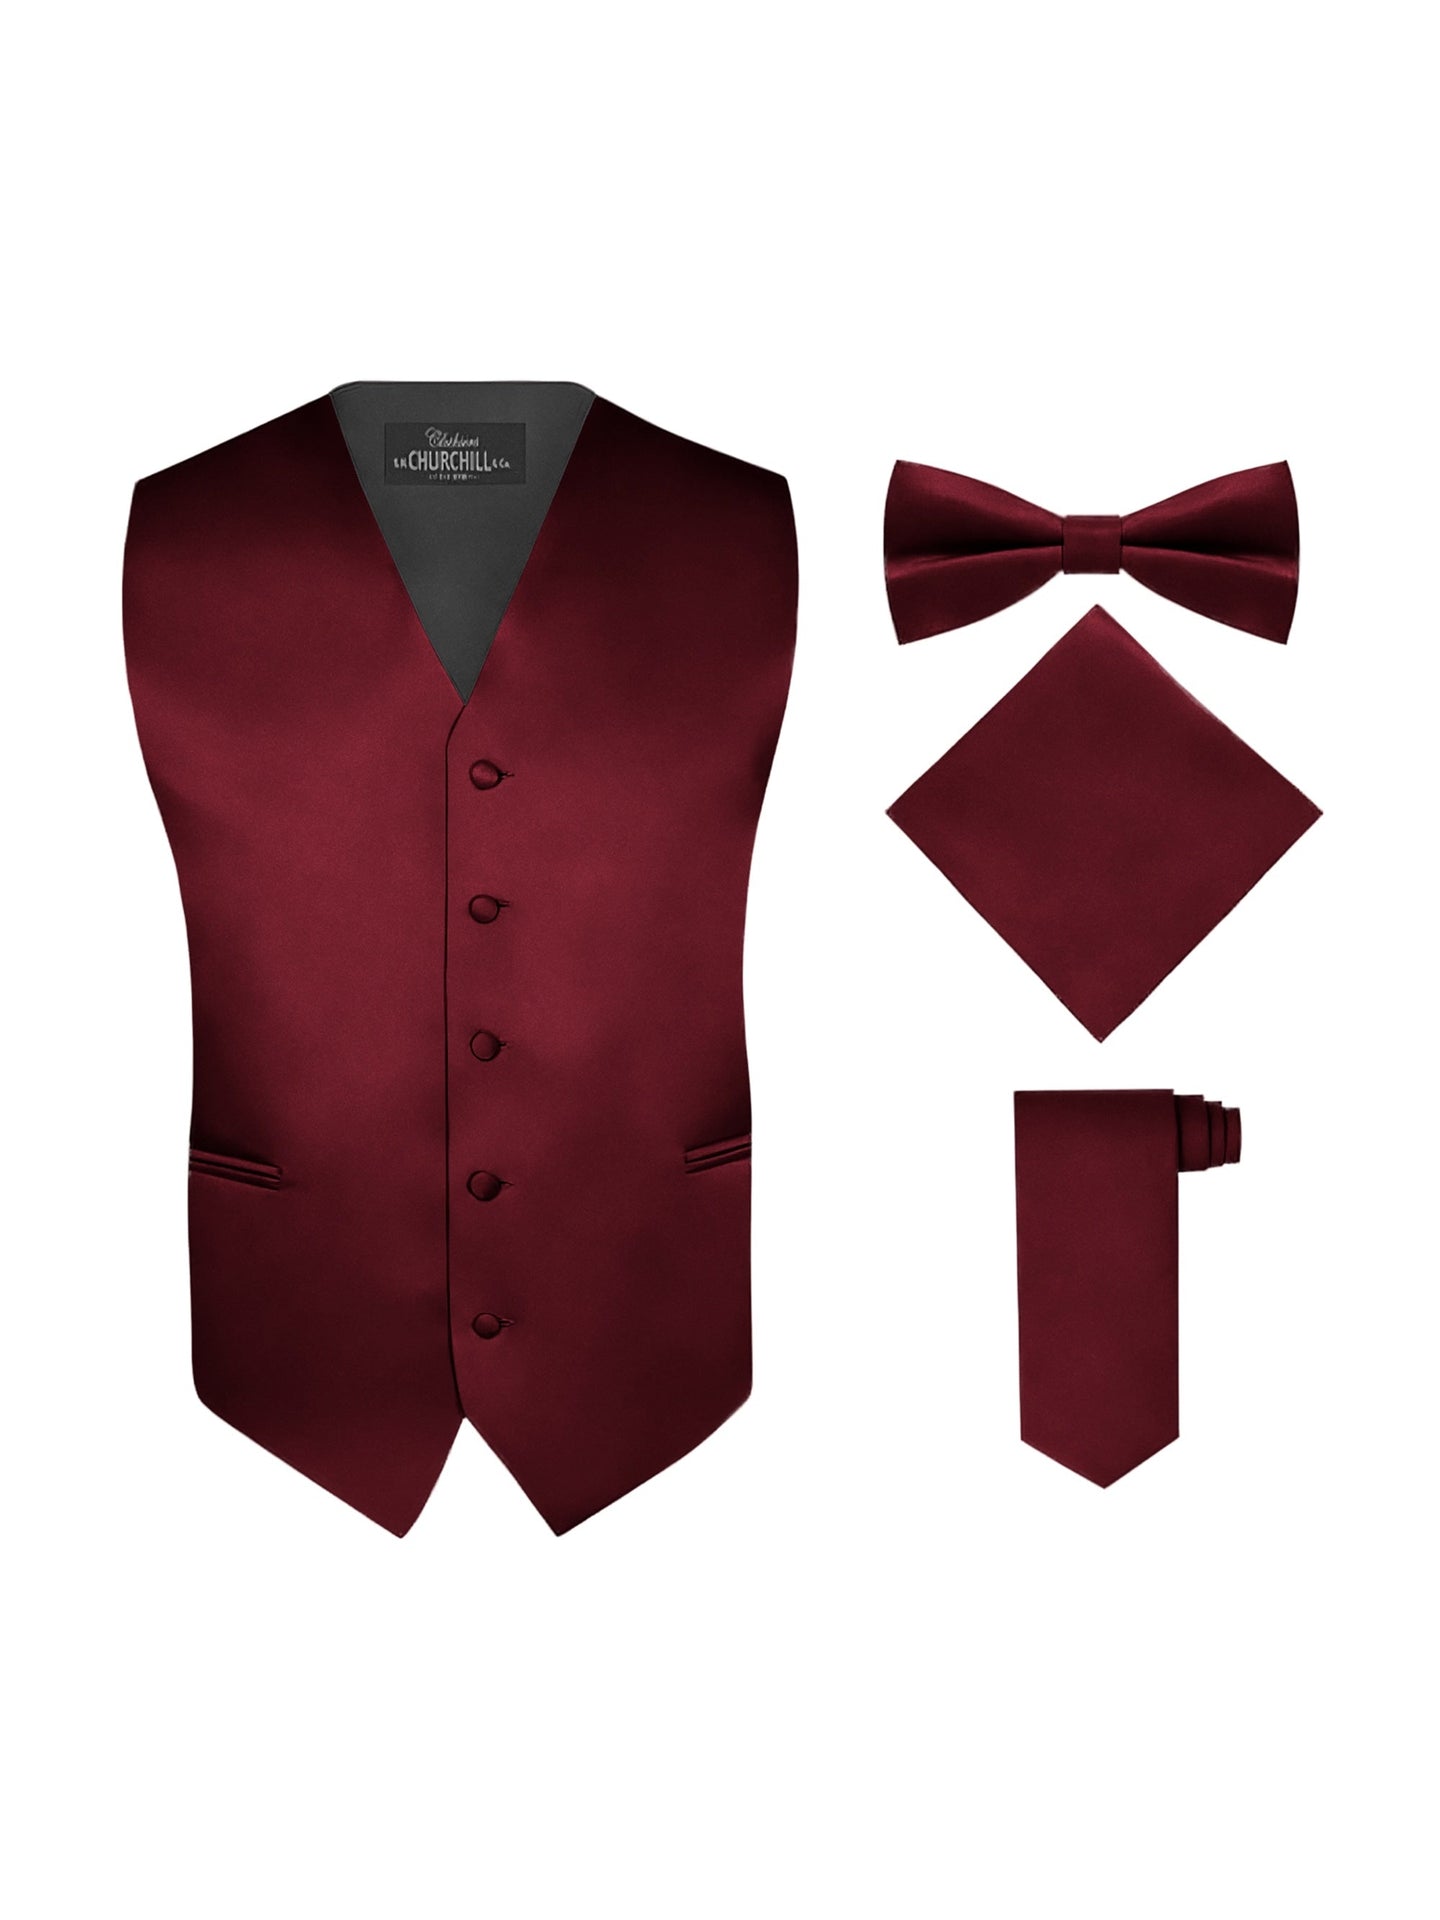 S.H. Churchill & Co. Men's 4 Piece Burgundy Vest Set, with Bow Tie, Neck Tie & Pocket Hankie